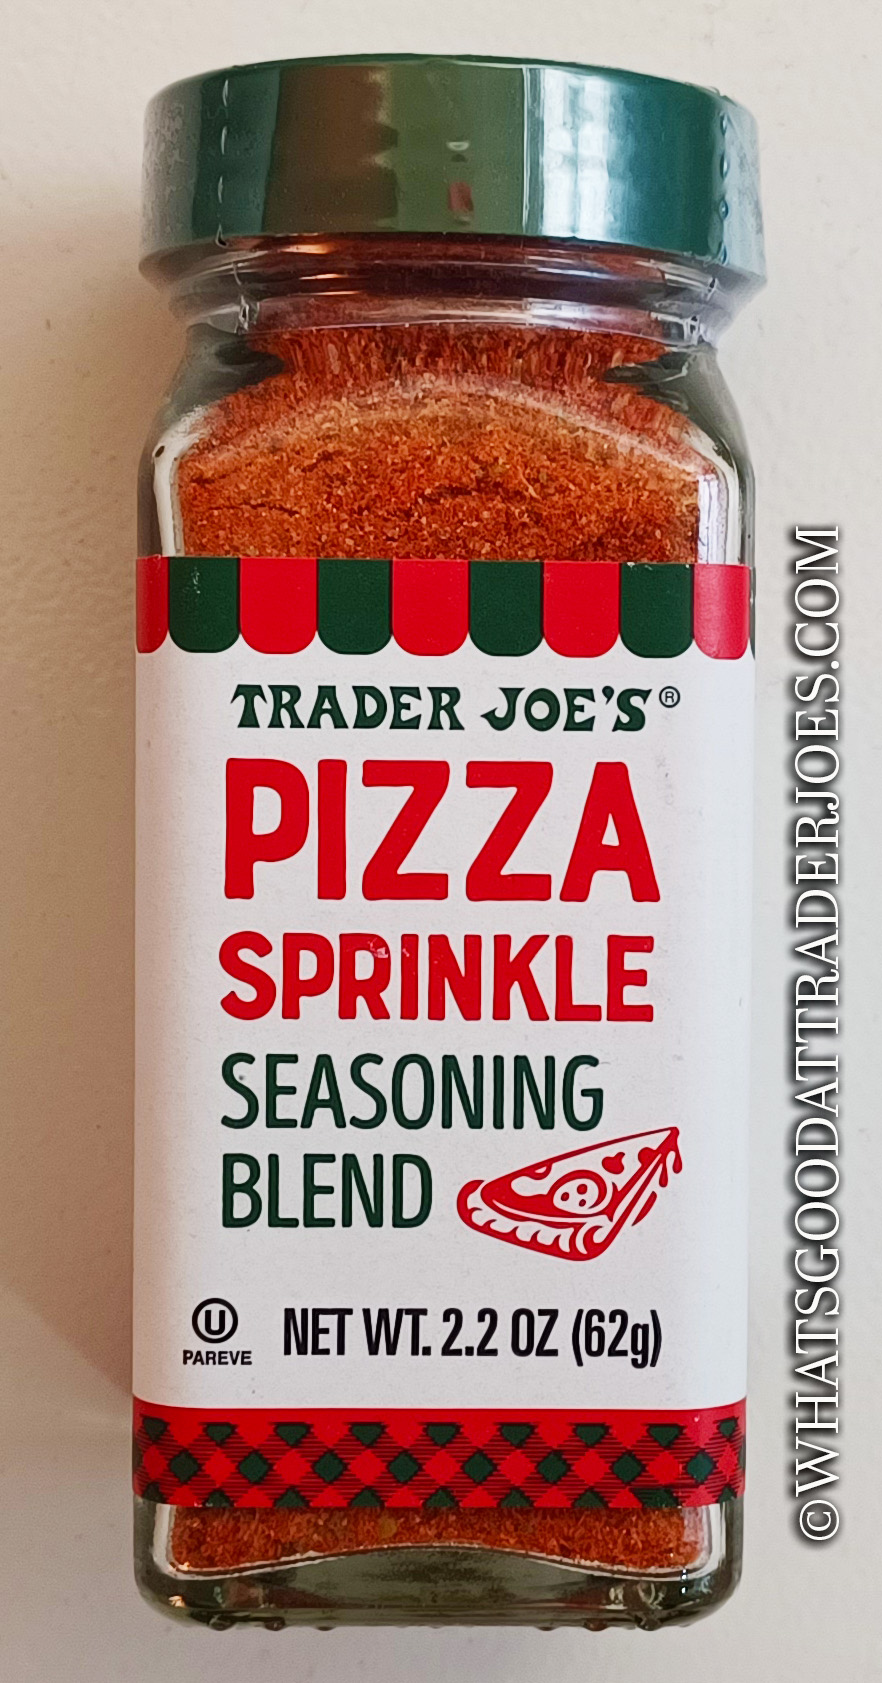 Trader Joe's New Seasoning Blend Is Based On A Favorite Burger